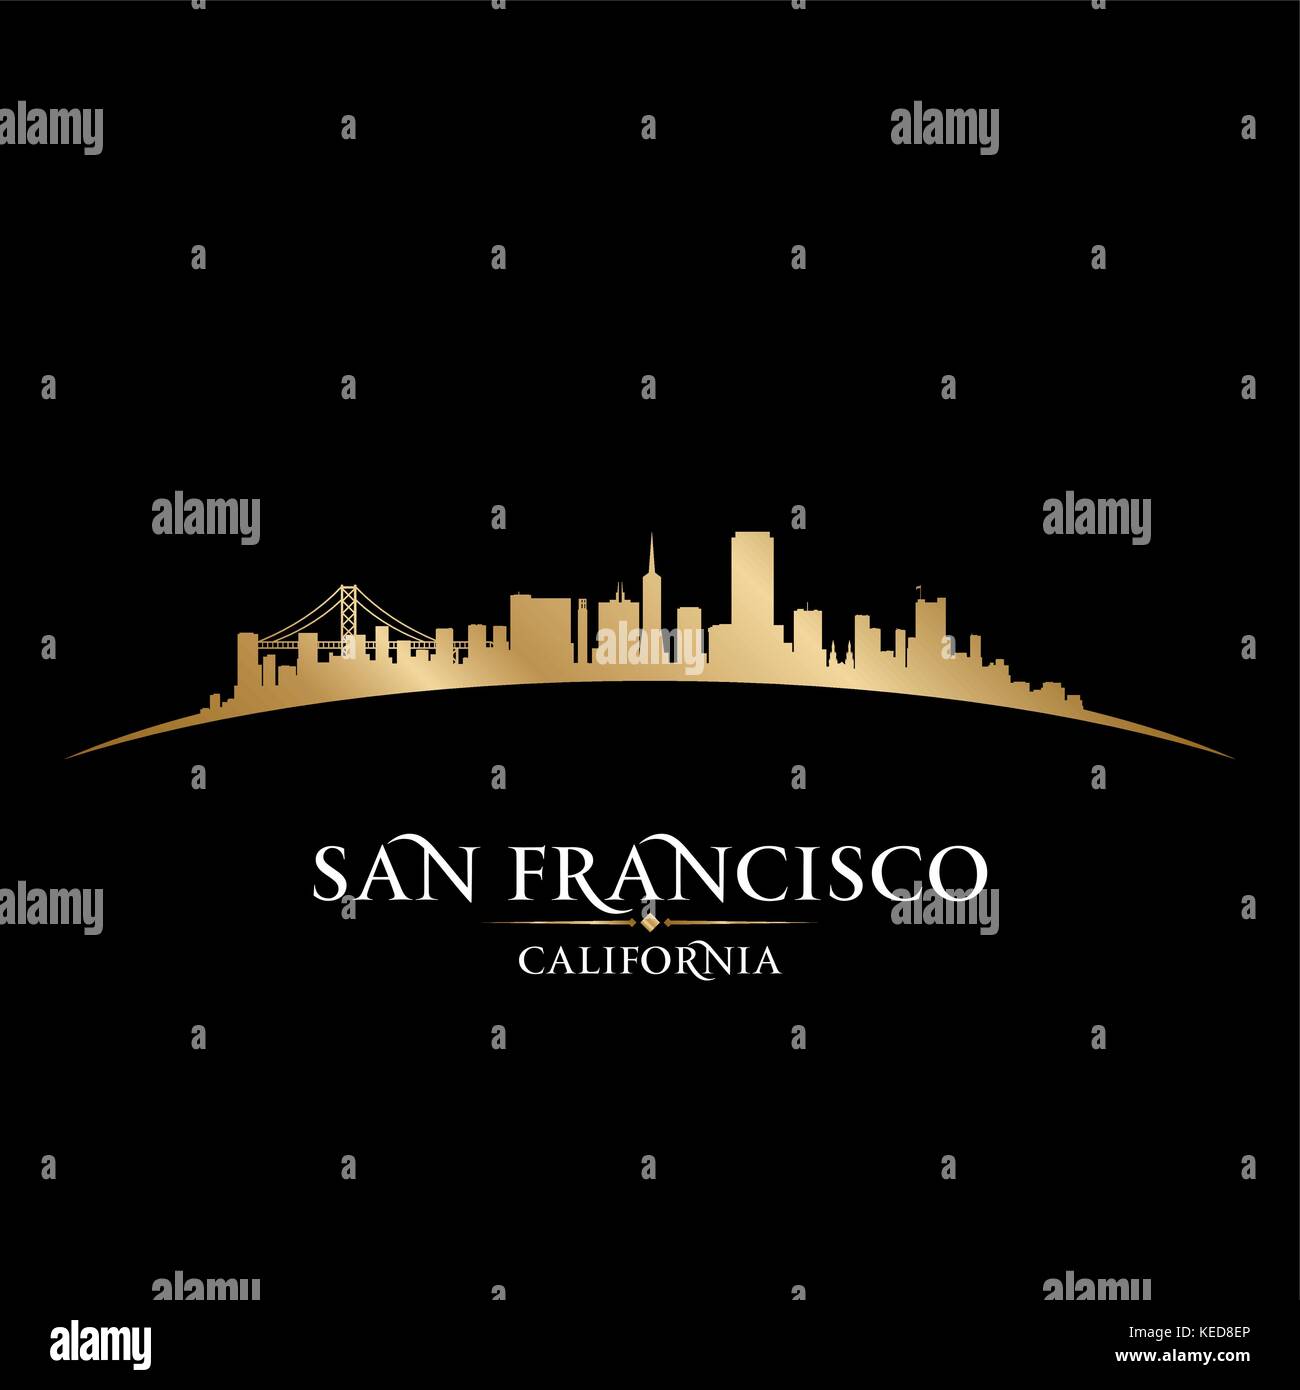 San Francisco California city skyline silhouette. Vector illustration Stock Vector